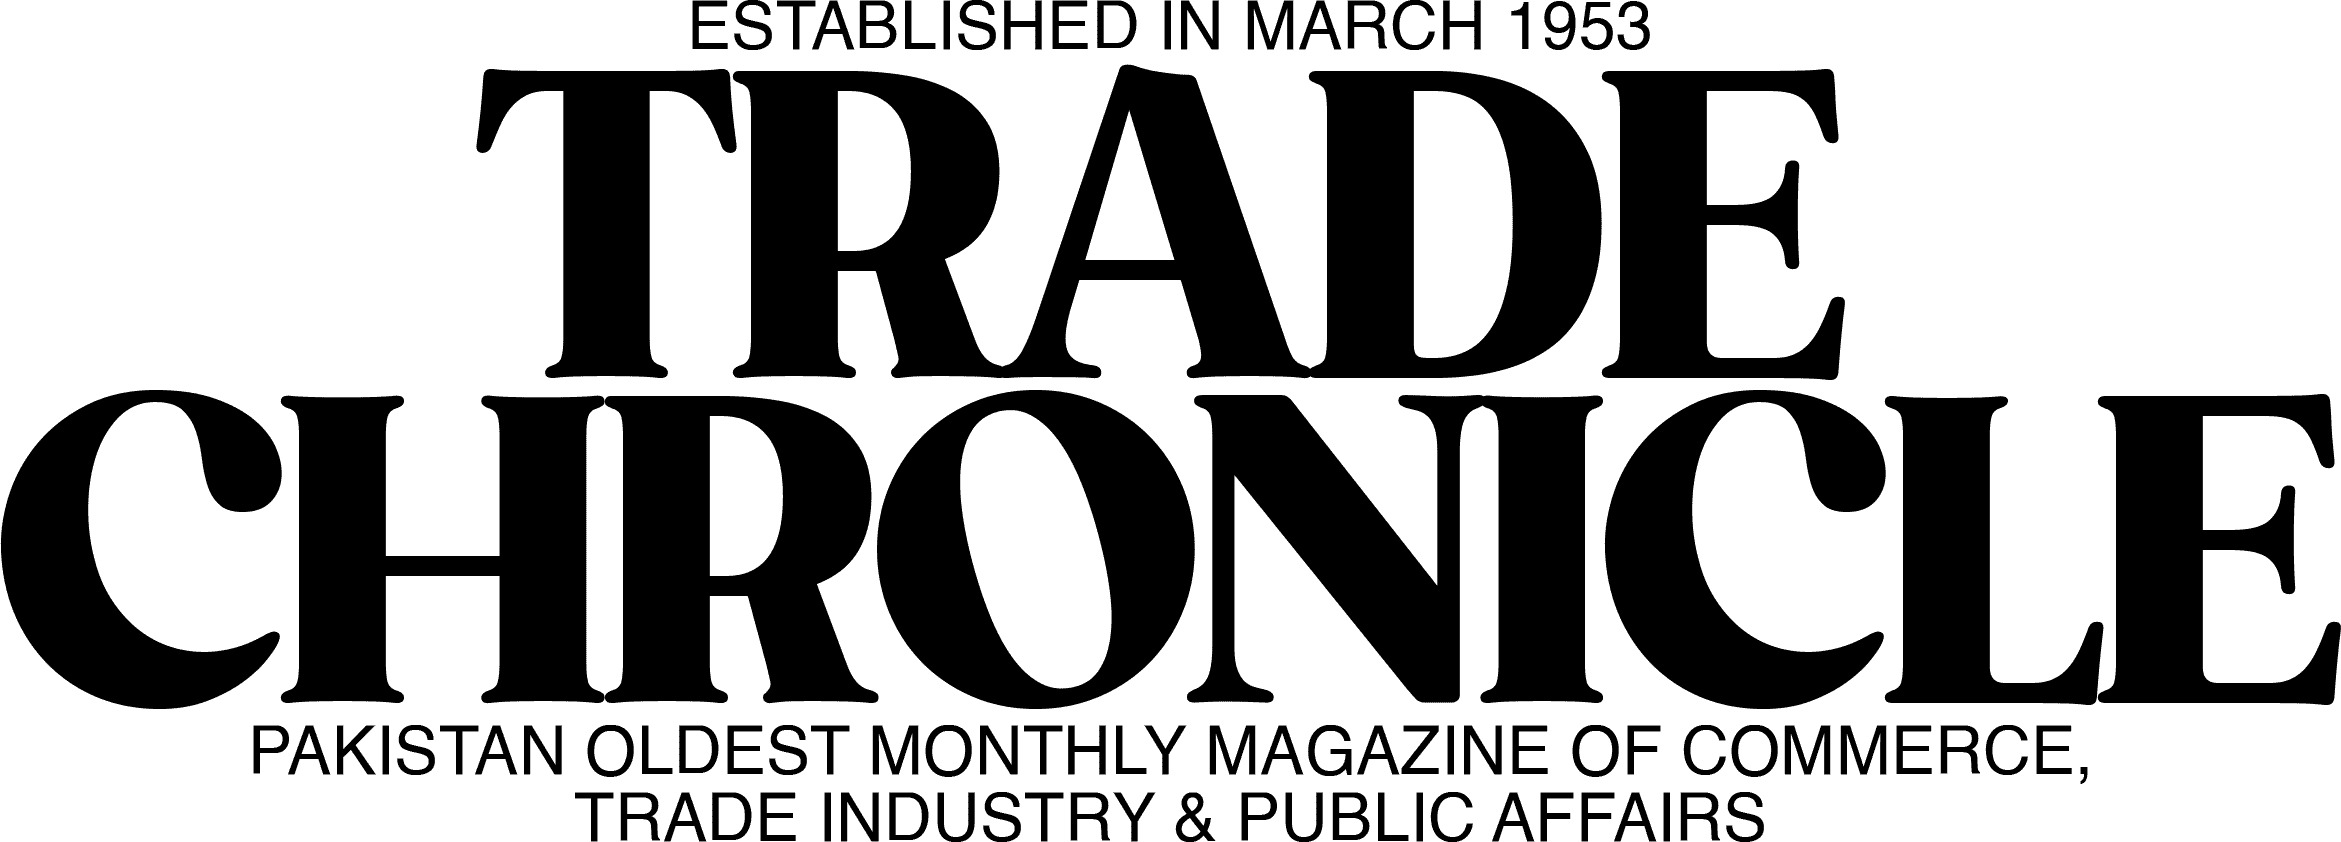 trade-chronicle-logo